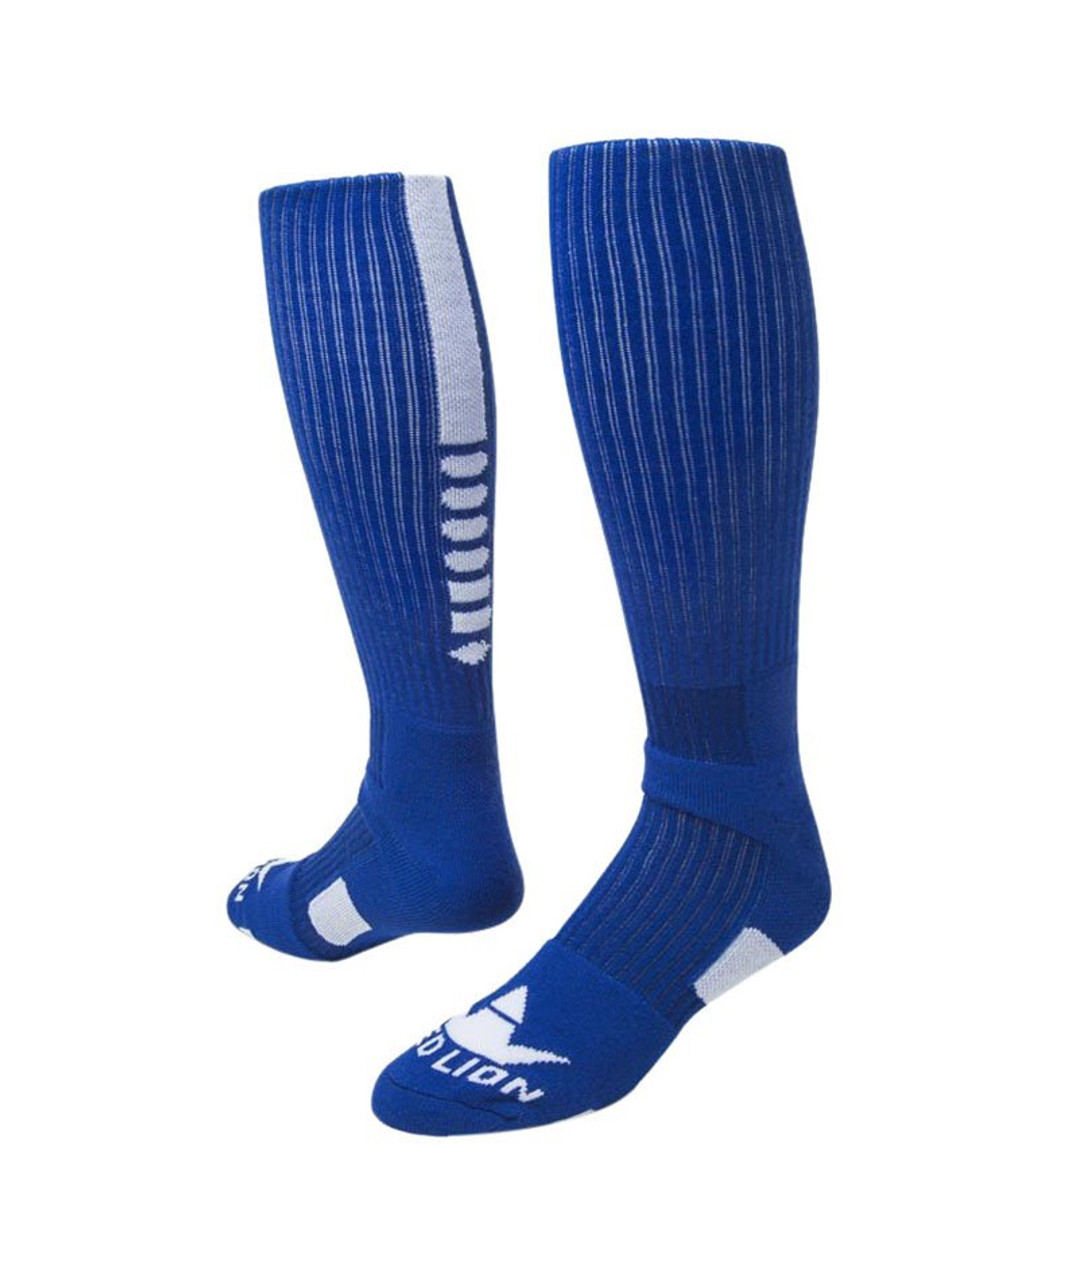 Pegasus 2.0 Knee High Sports Socks - Royal Blue & White